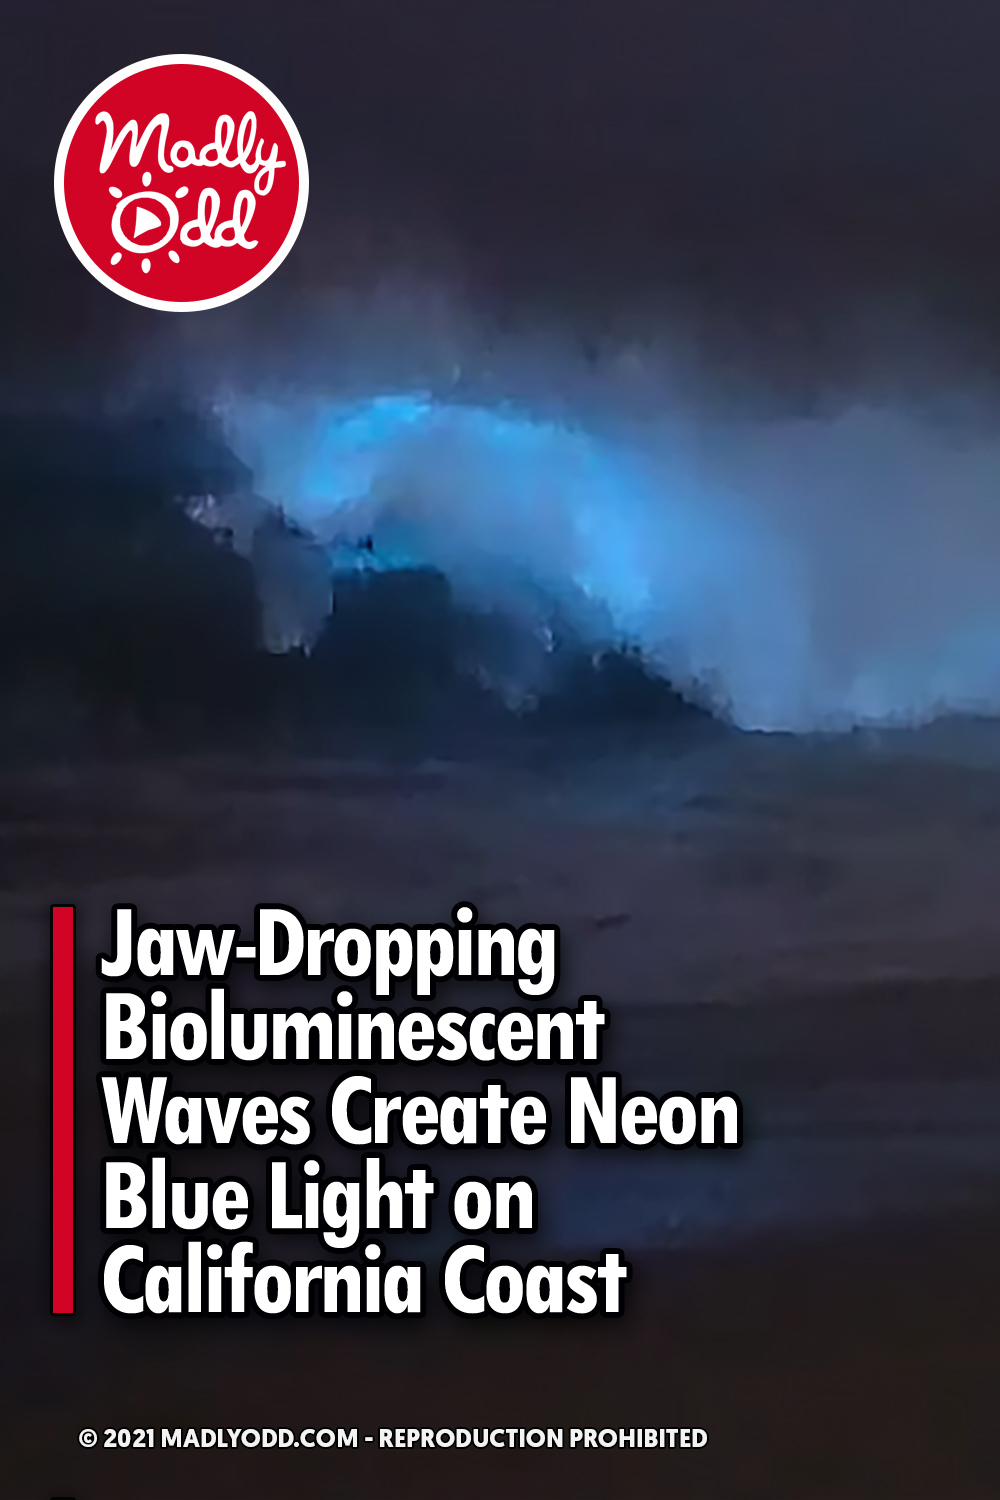 Jaw-Dropping Bioluminescent Waves Create Neon Blue Light on California Coast